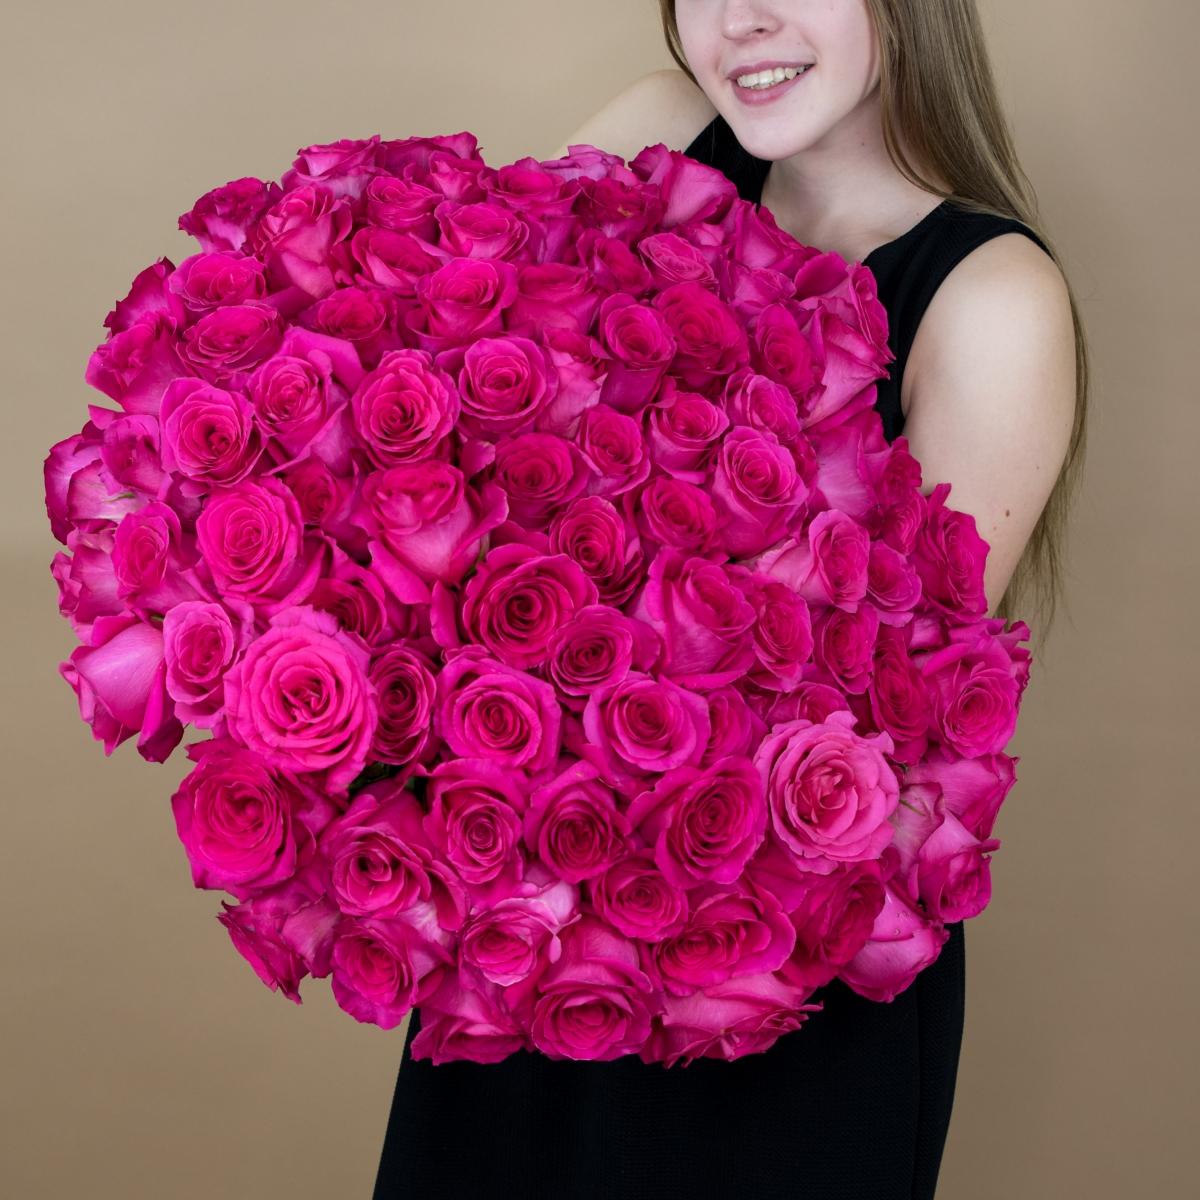 Букет из розовых роз 75 шт. (40 см) артикул букета  16170kos